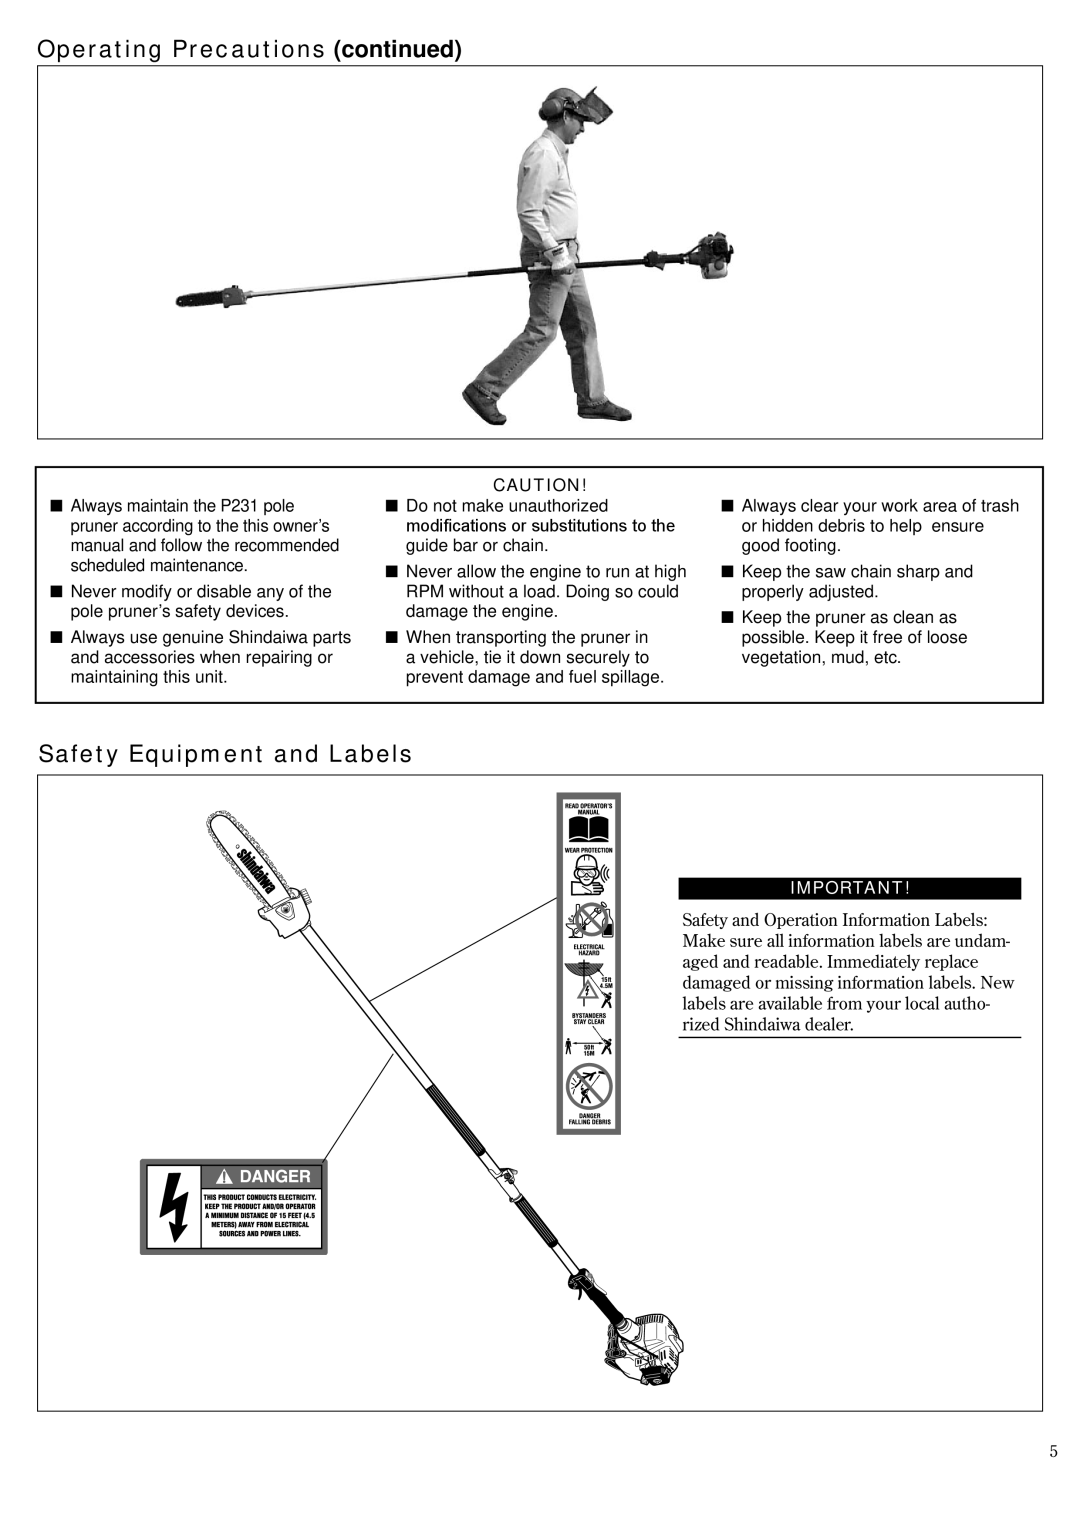 Shindaiwa P231, 62888-94013 manual Operating Precautions continued, Safety Equipment and Labels 